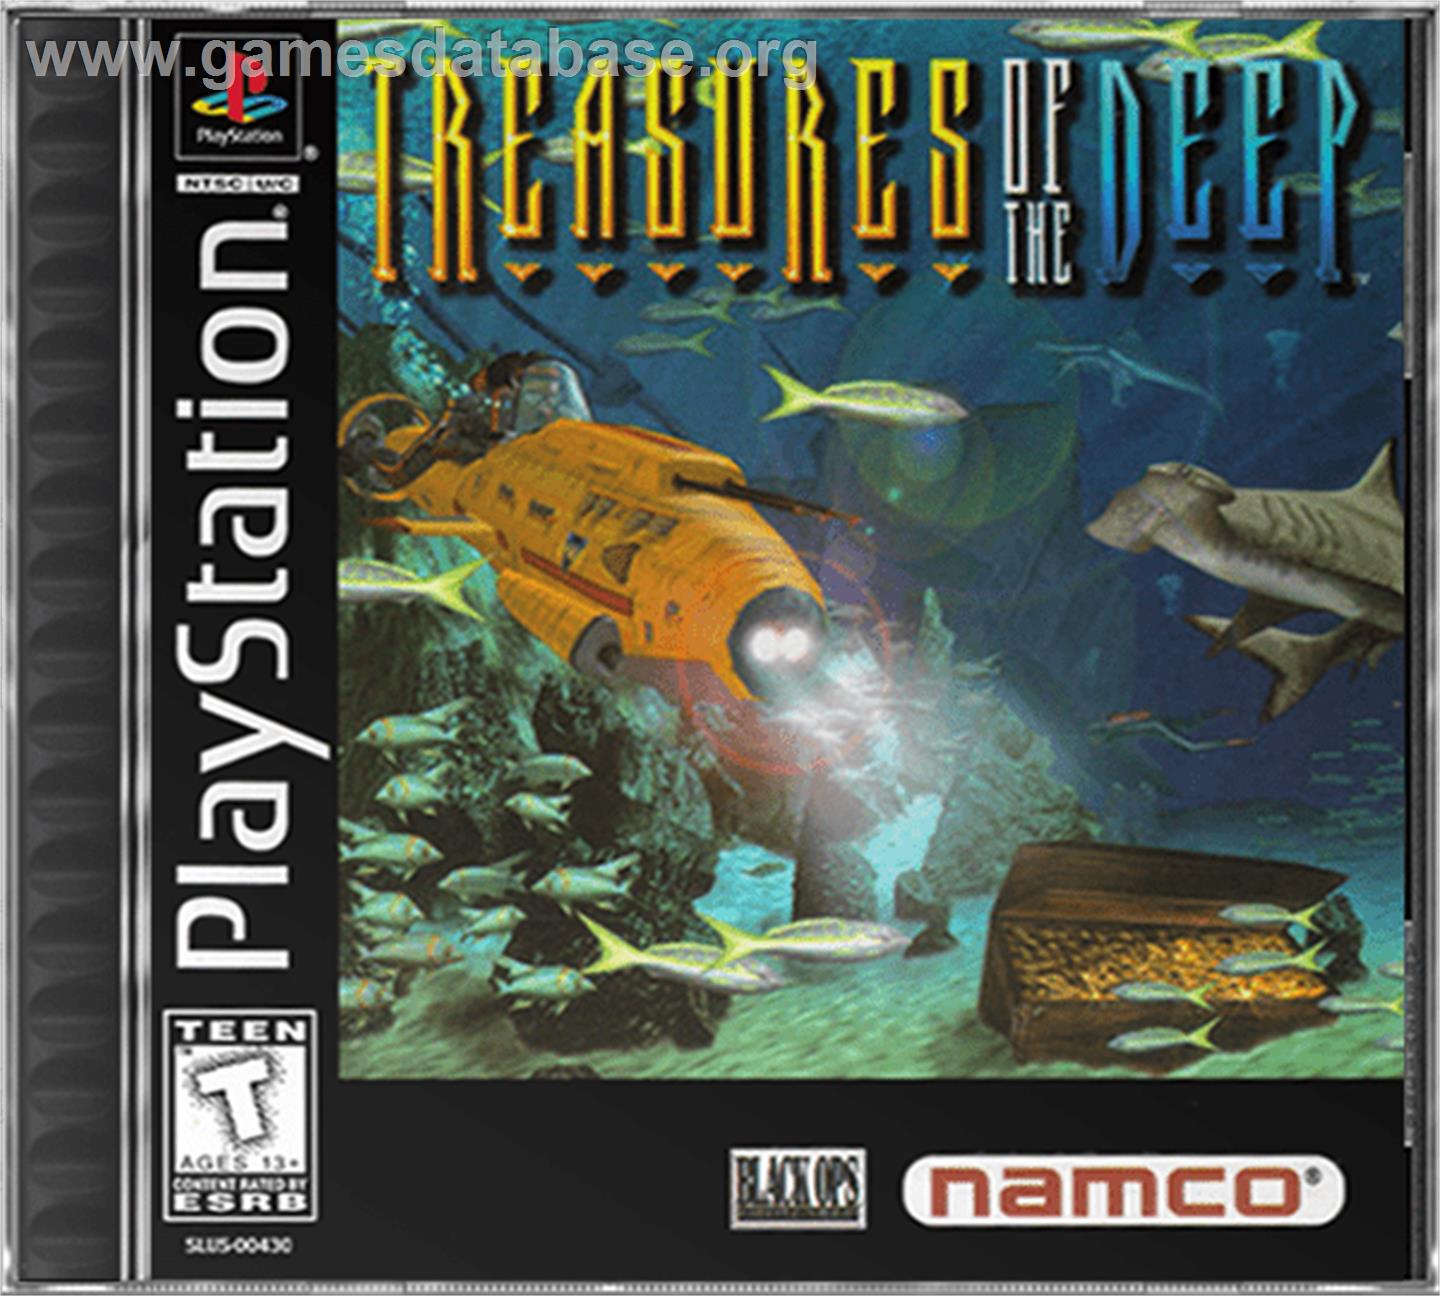 Treasures of the Deep - Sony Playstation - Artwork - Box